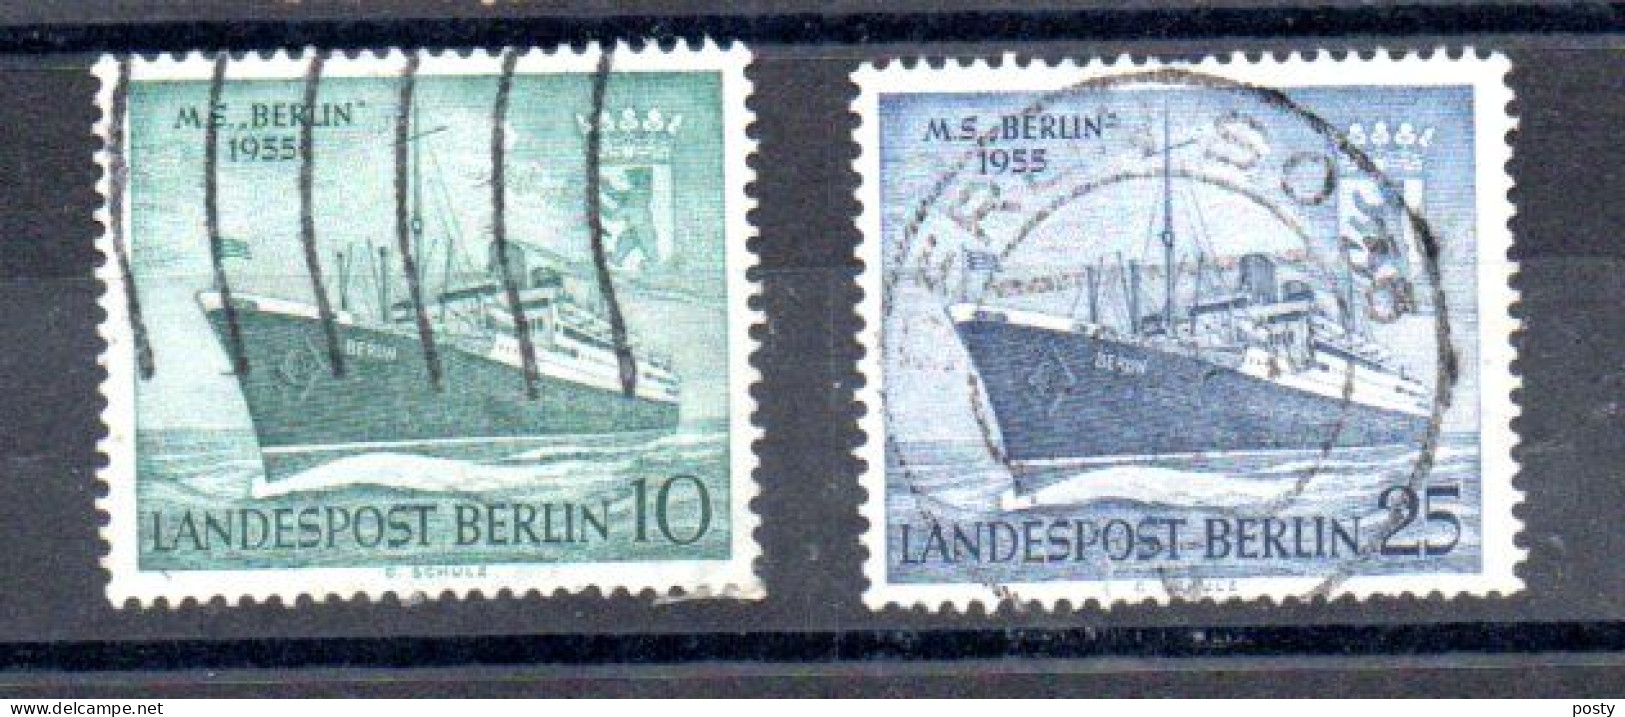 ALLEMAGNE - GERMANY - BERLIN - 1955 - M.S BERLIN - PAQUEBOT - SCHIFF - OCEANLINER - 10 + 25 - Oblitéré - Used - - Gebraucht